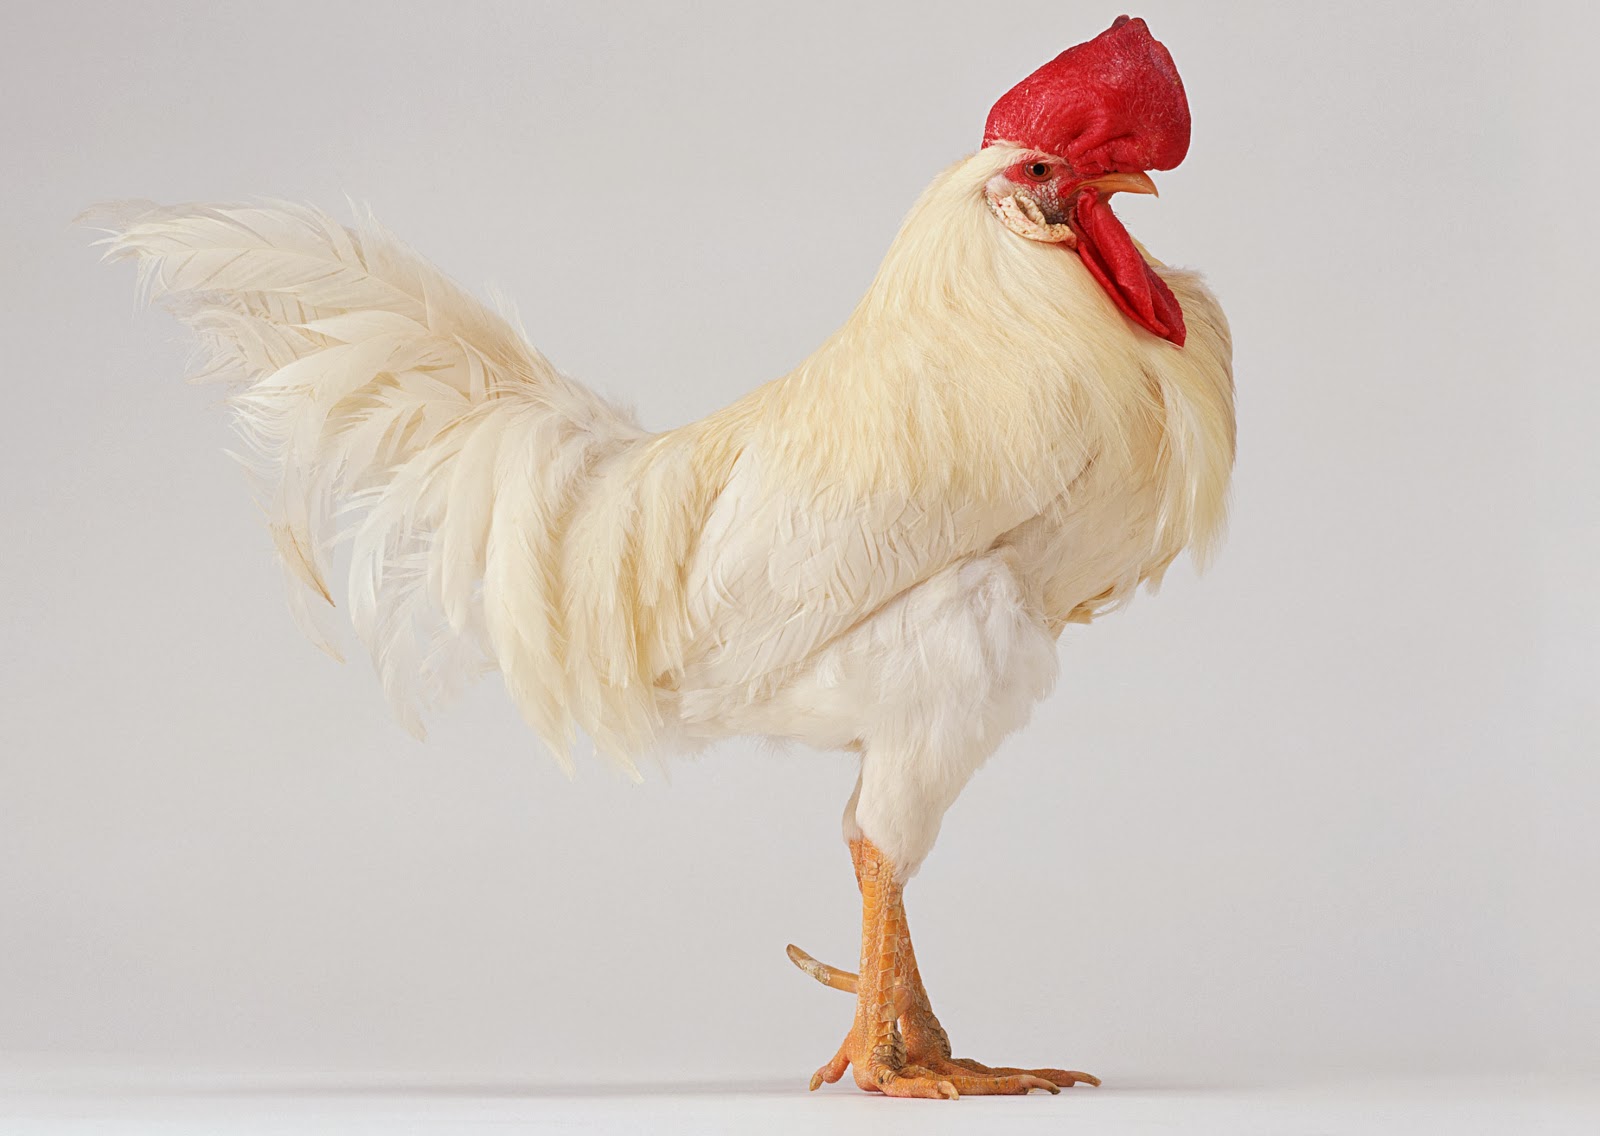 21 Gambar  Ayam  Stock Photo High Resolution